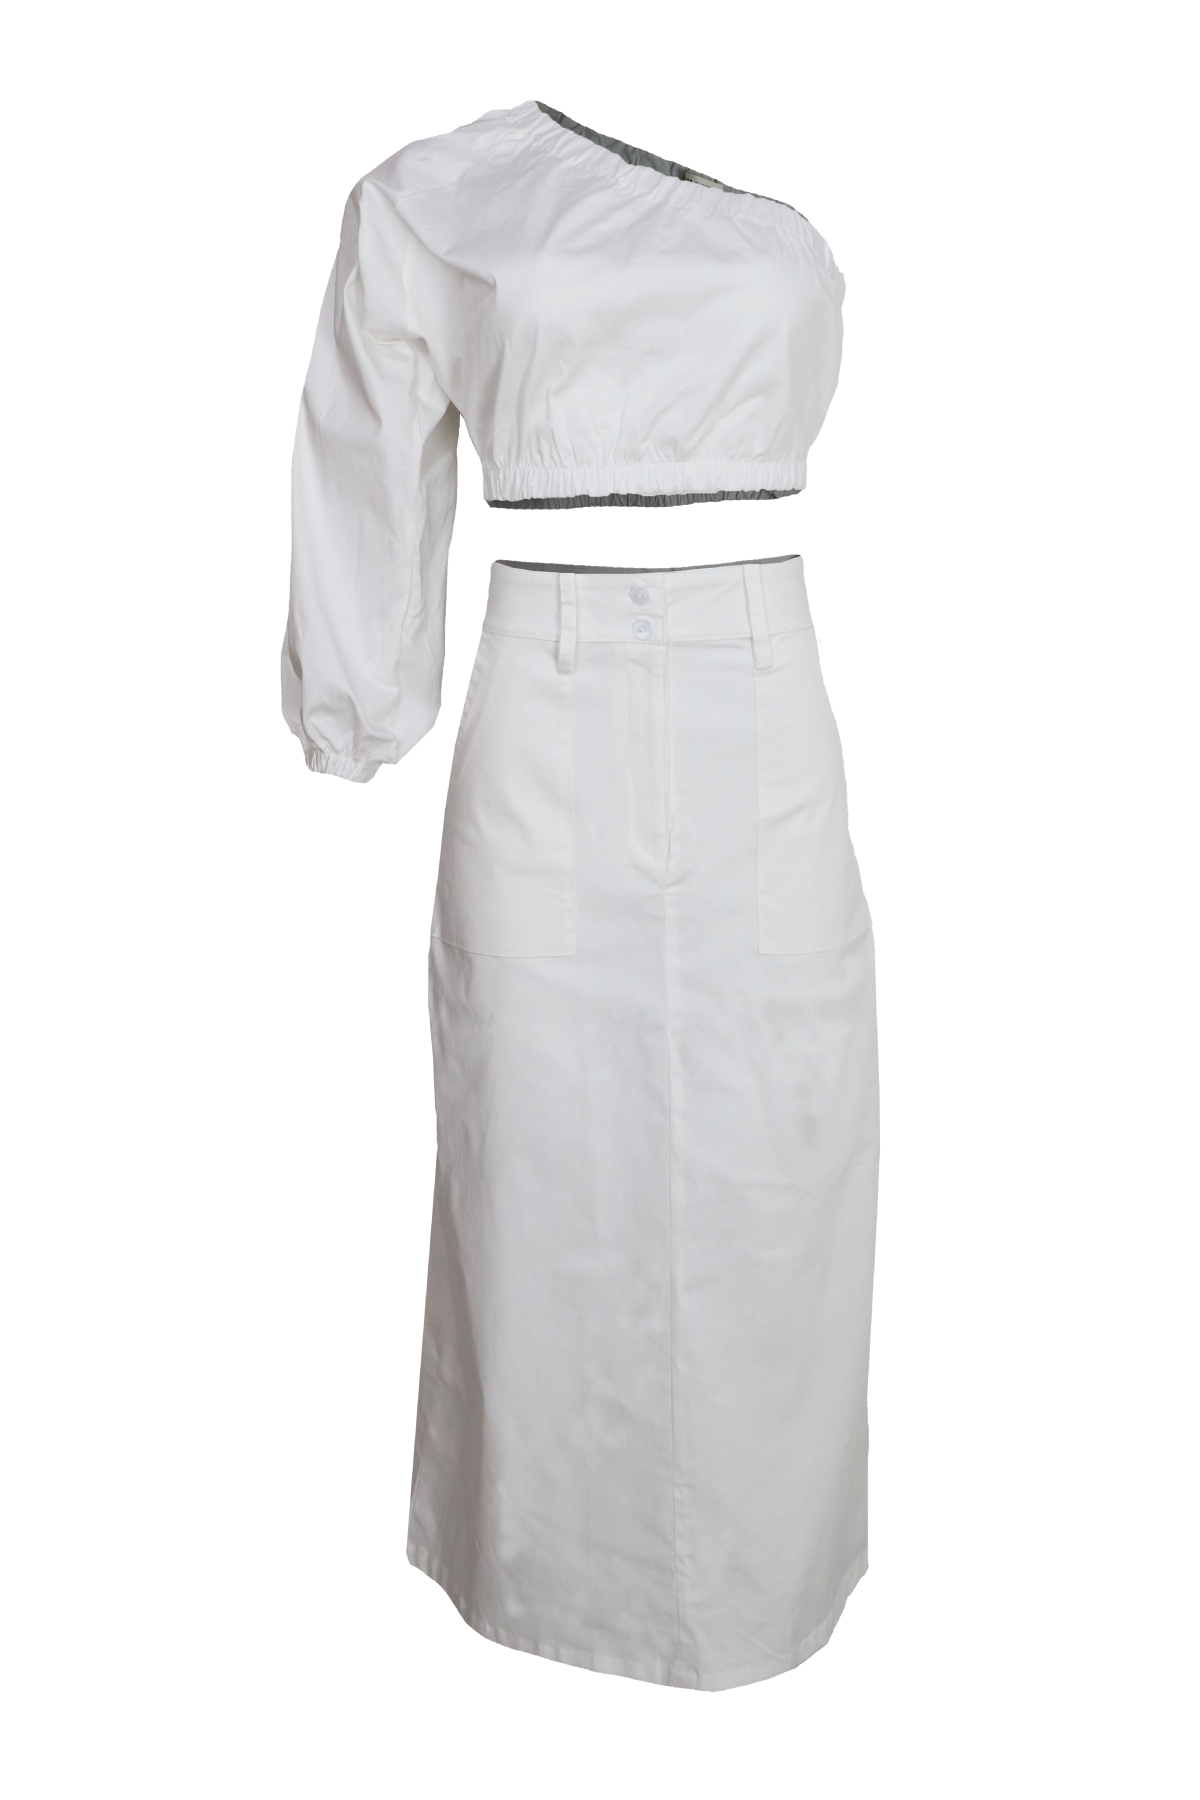 Set de blusa asimétrica con falda larga recta color blanco